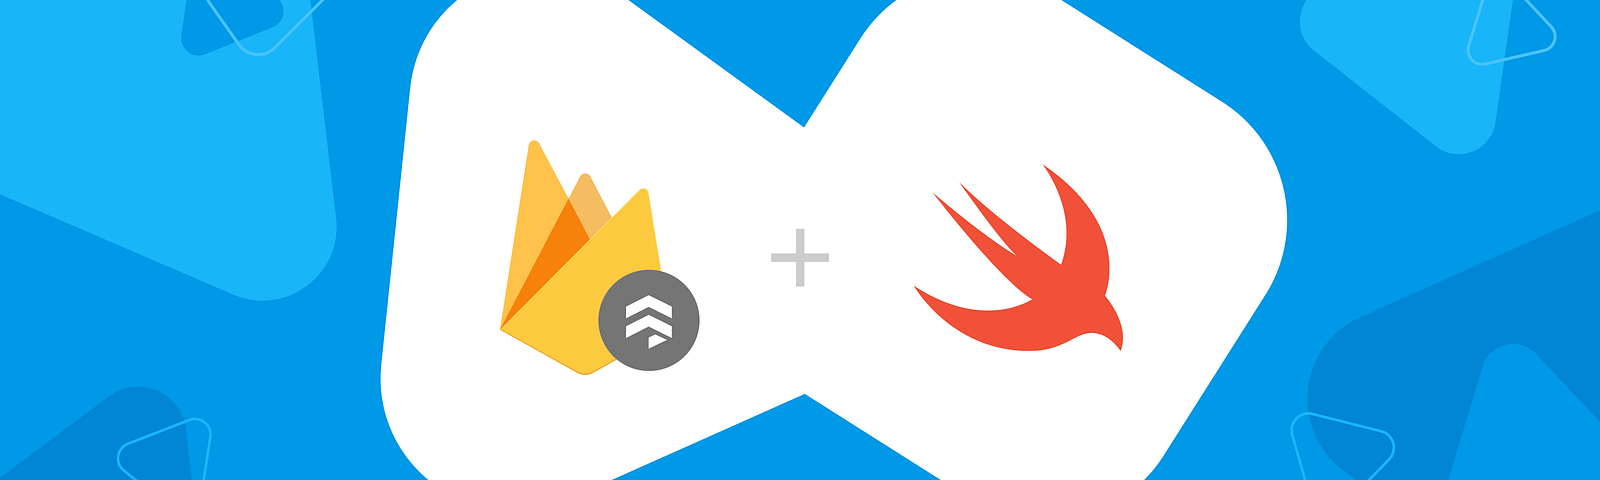 Firebase + Swift logo header